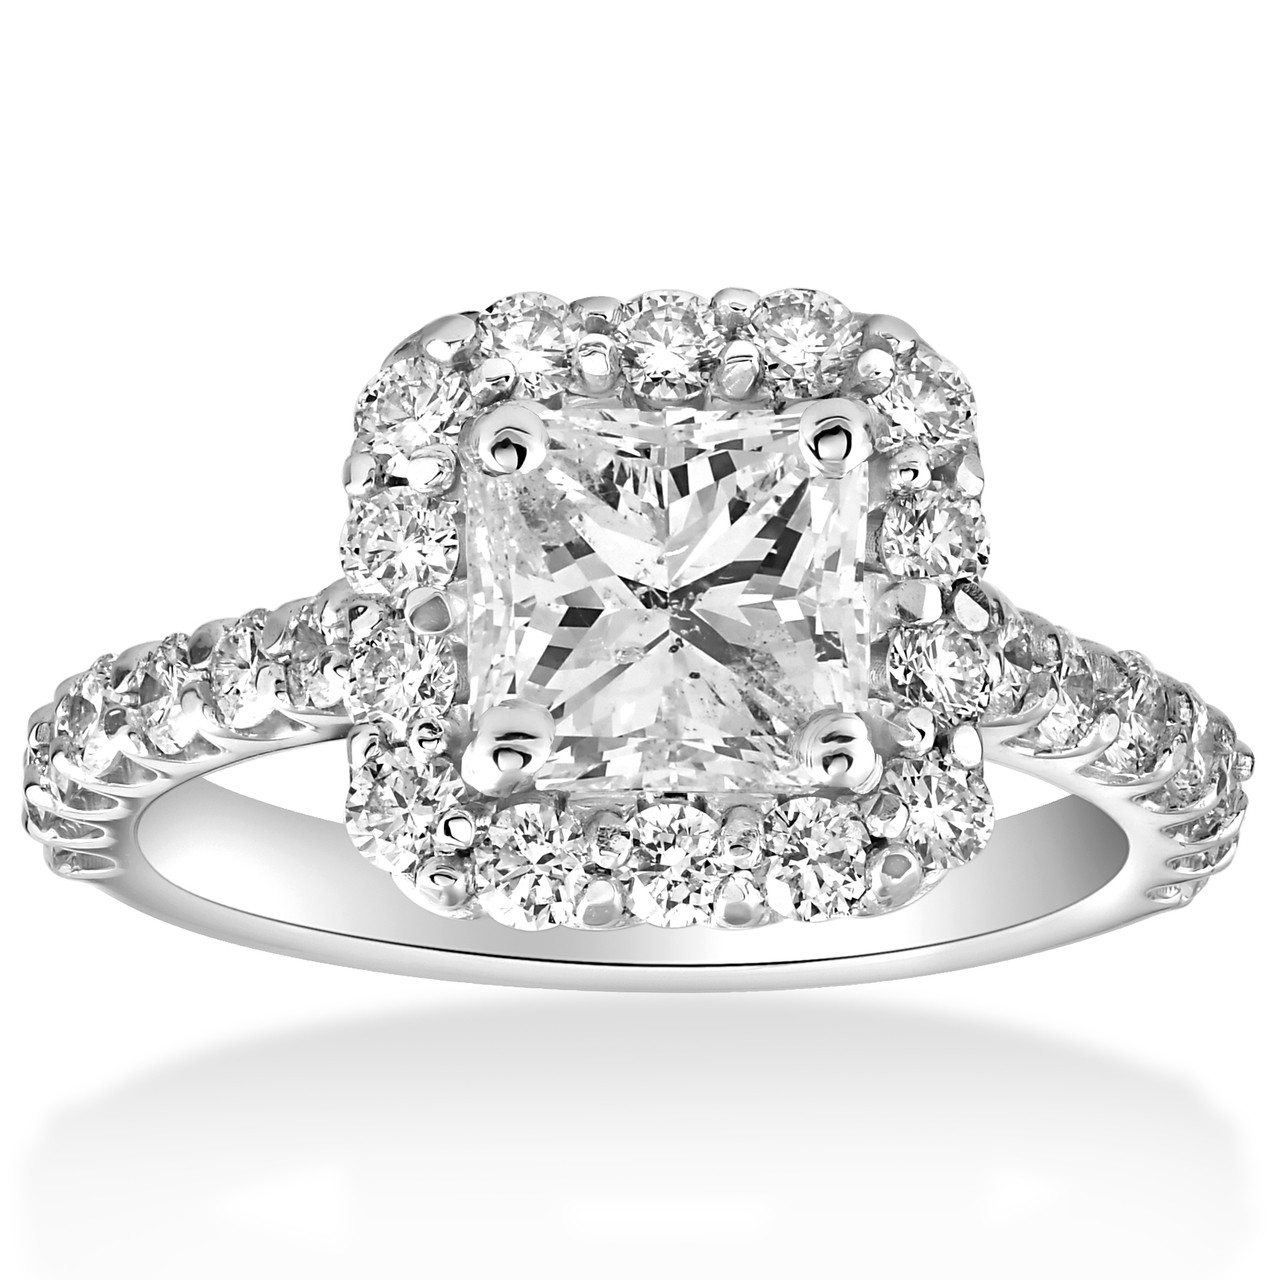 Square Princess Cut Engagement Rings
 2 cttw Halo Princess Square Cut Diamond Engagement Ring